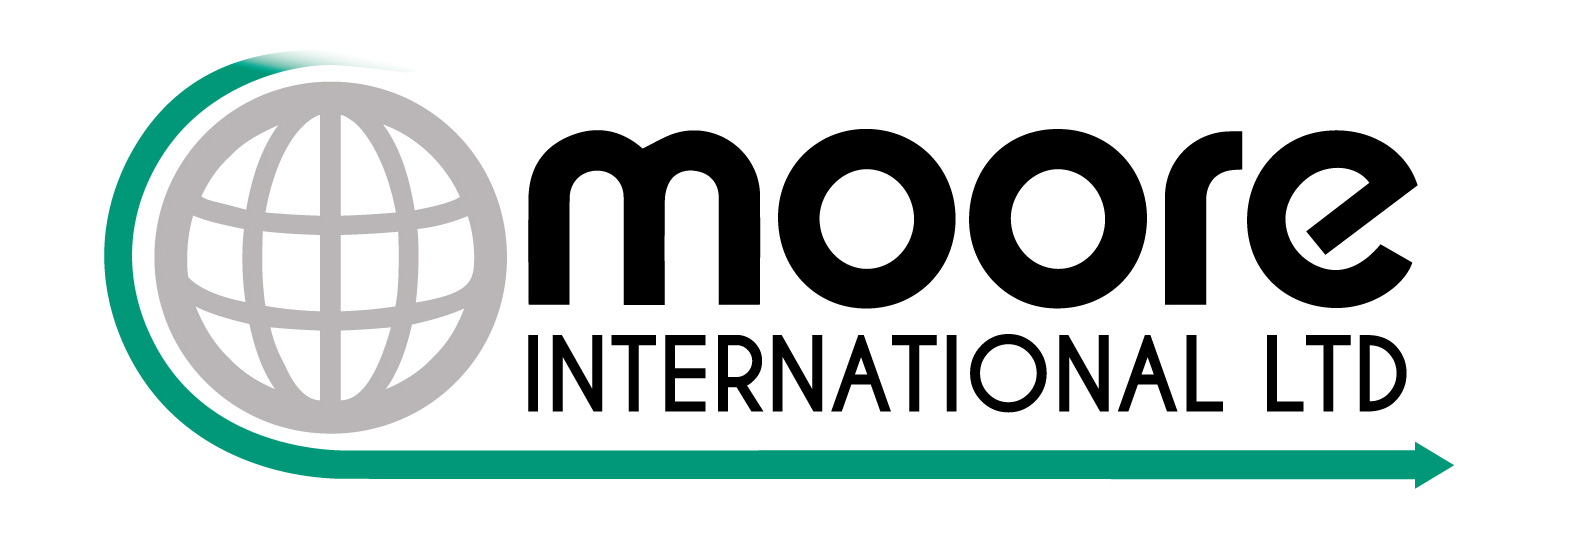 Moore International